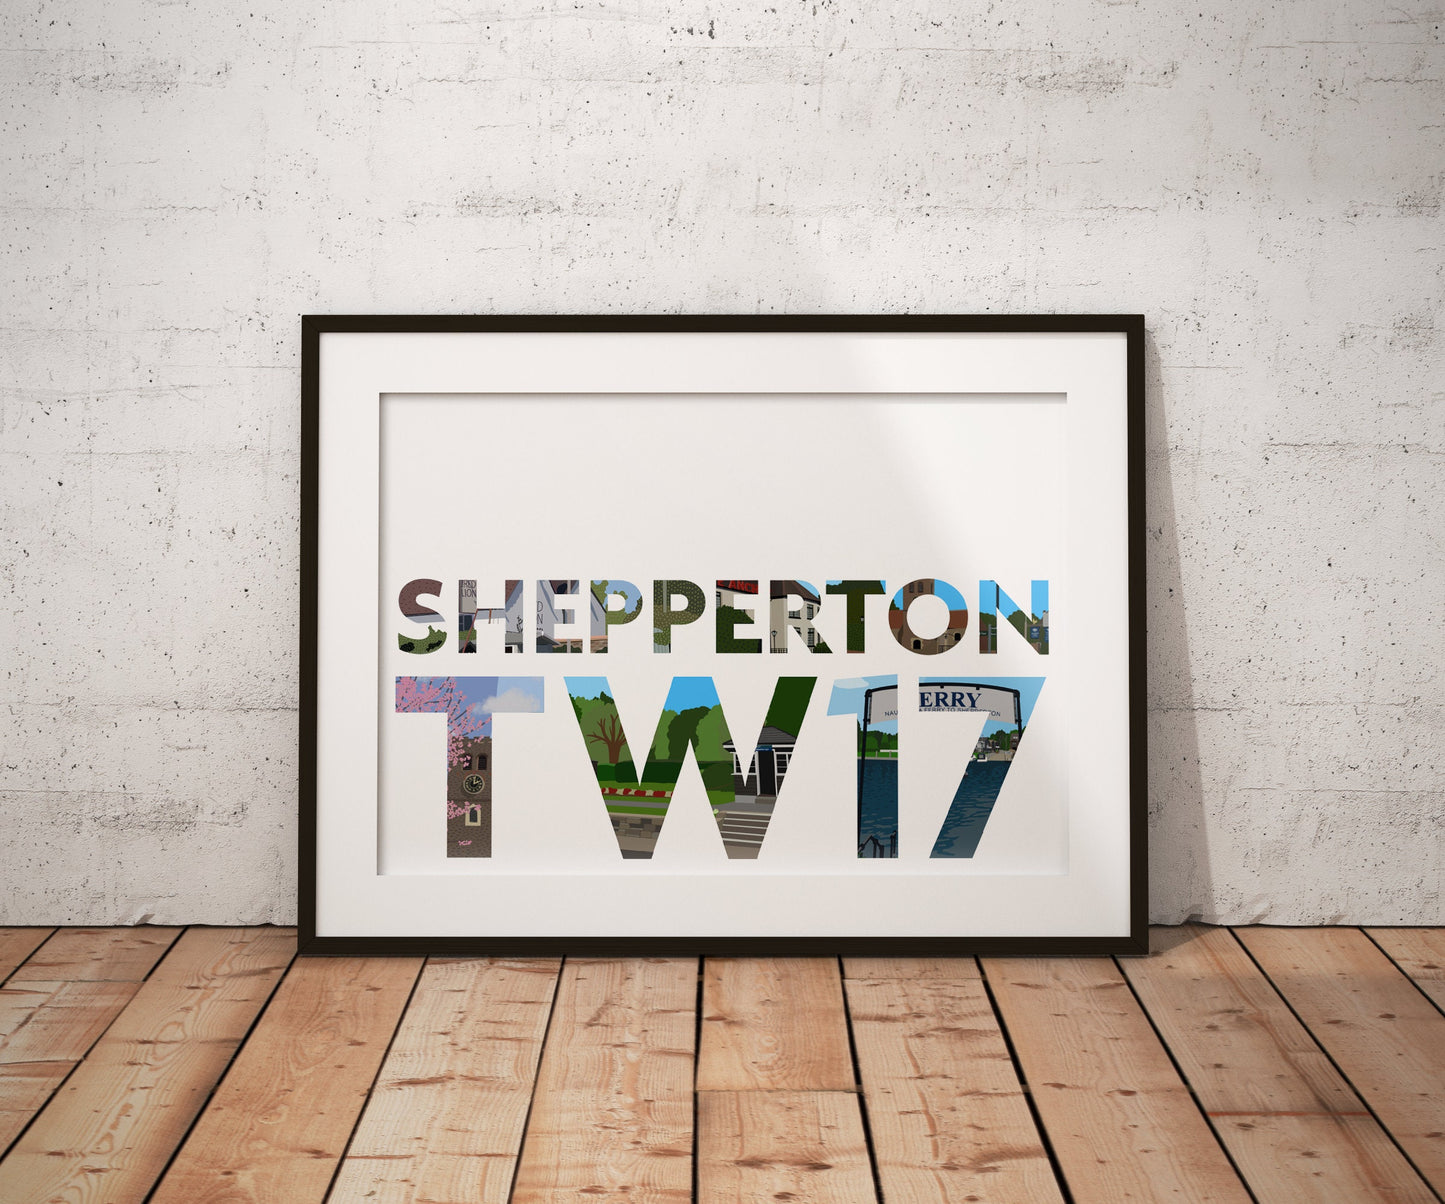 Shepperton TW17, Illustrated Type - Digital Print